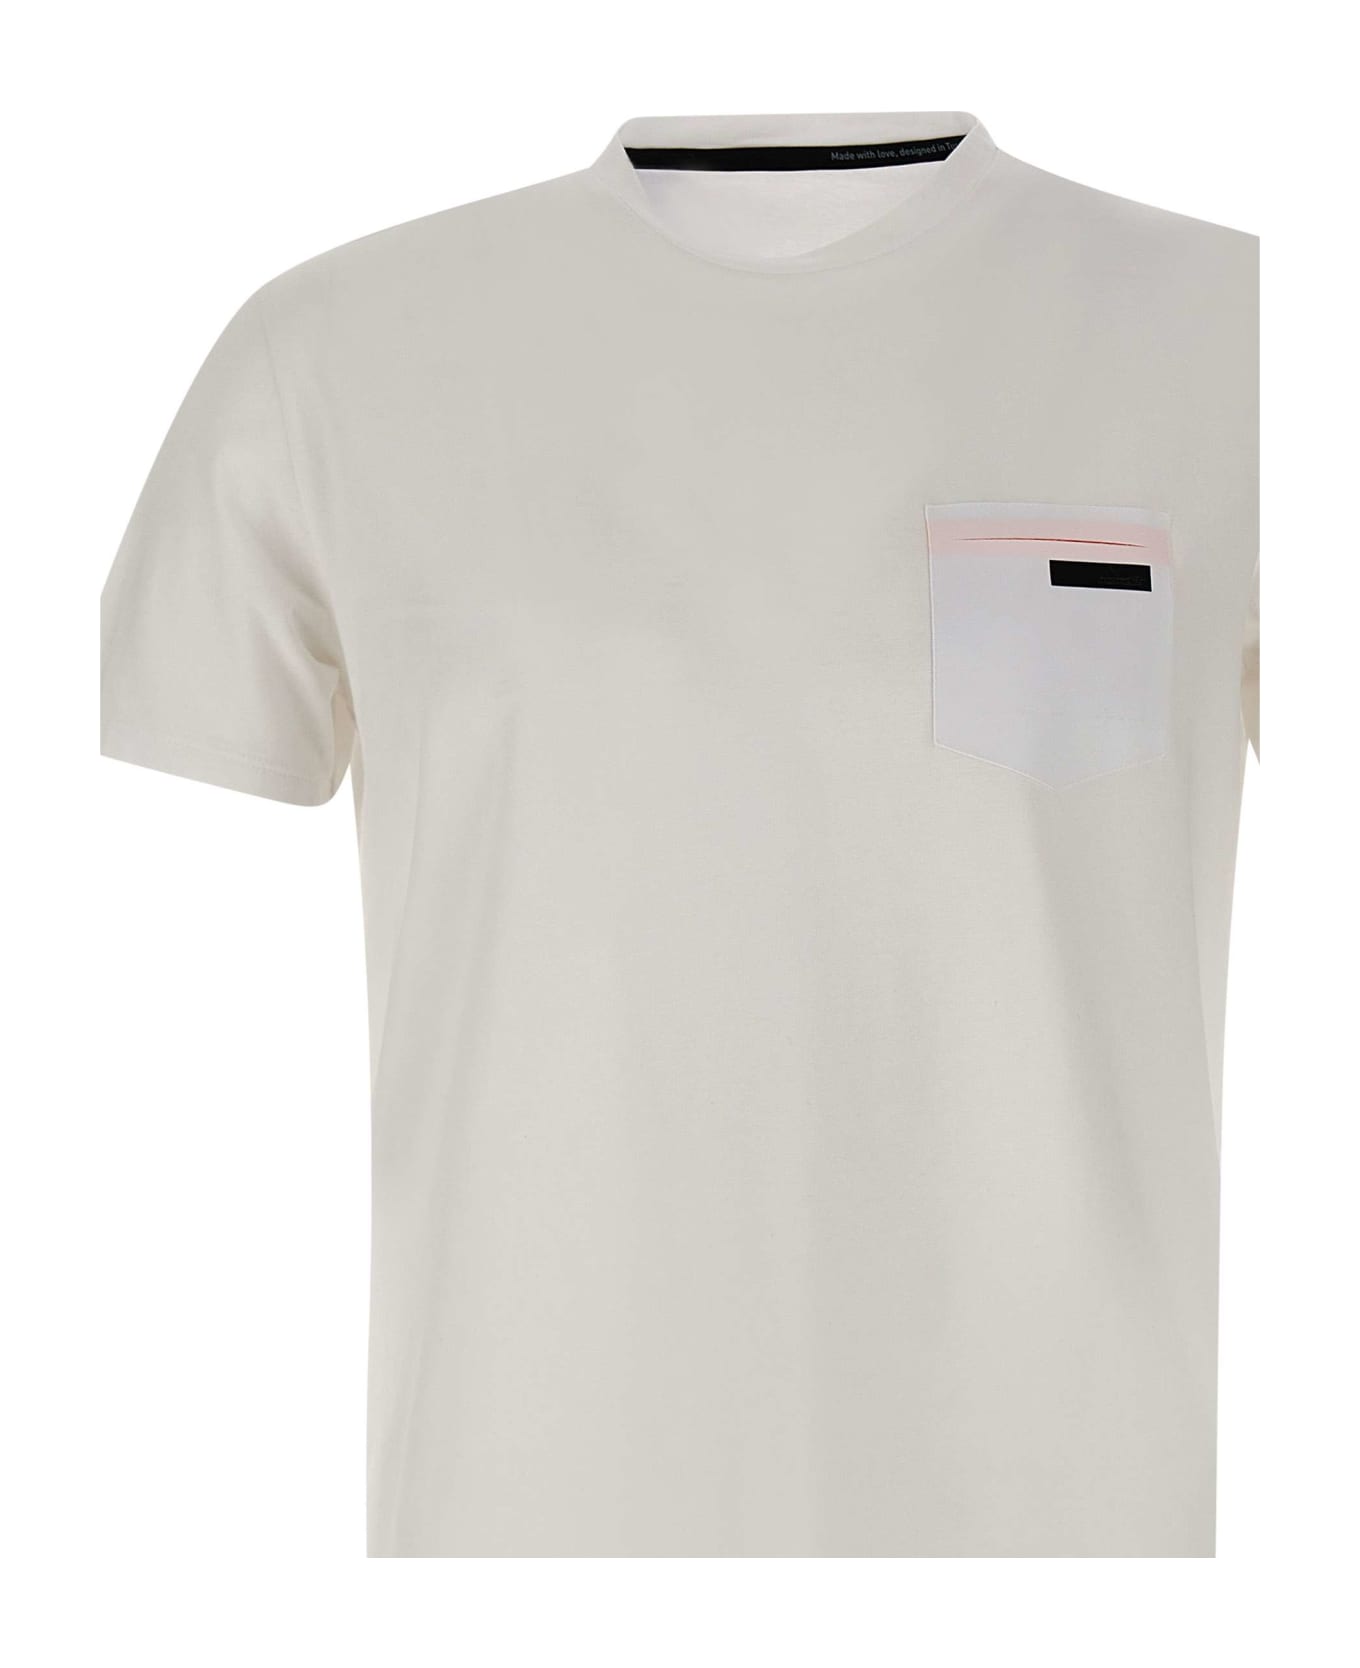 RRD - Roberto Ricci Design 'revo Shirty' T-shirt - Bianco シャツ